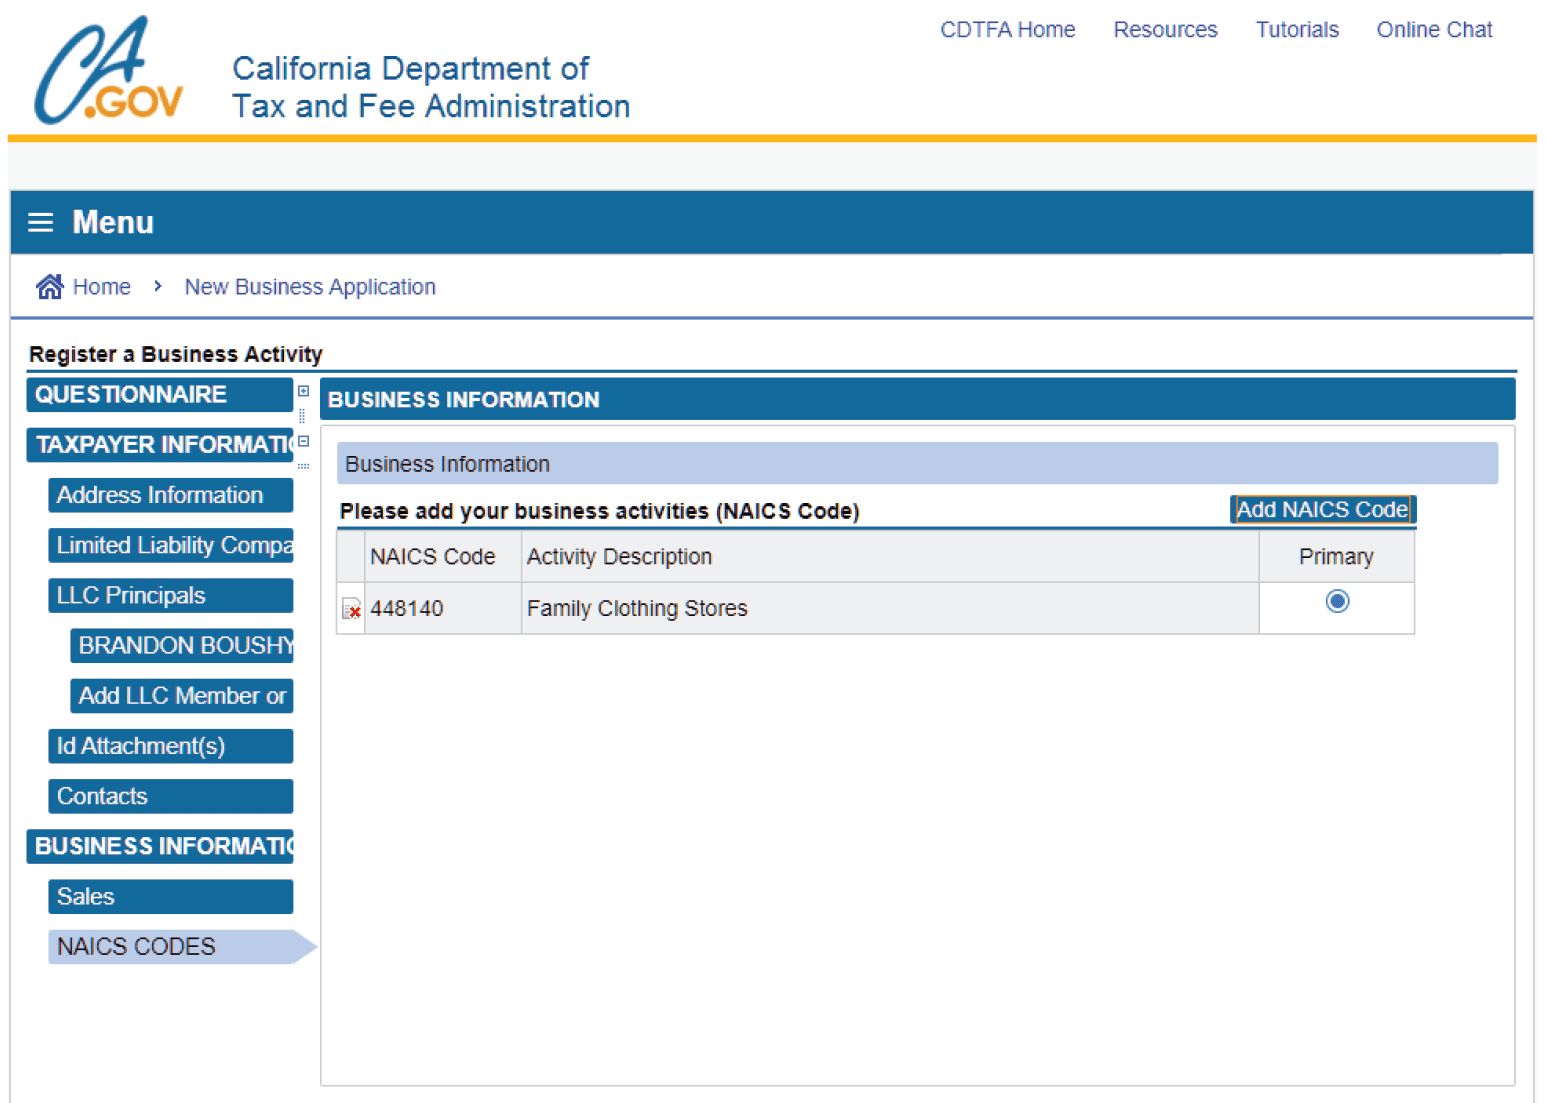 Website showing activity description for business license applicants